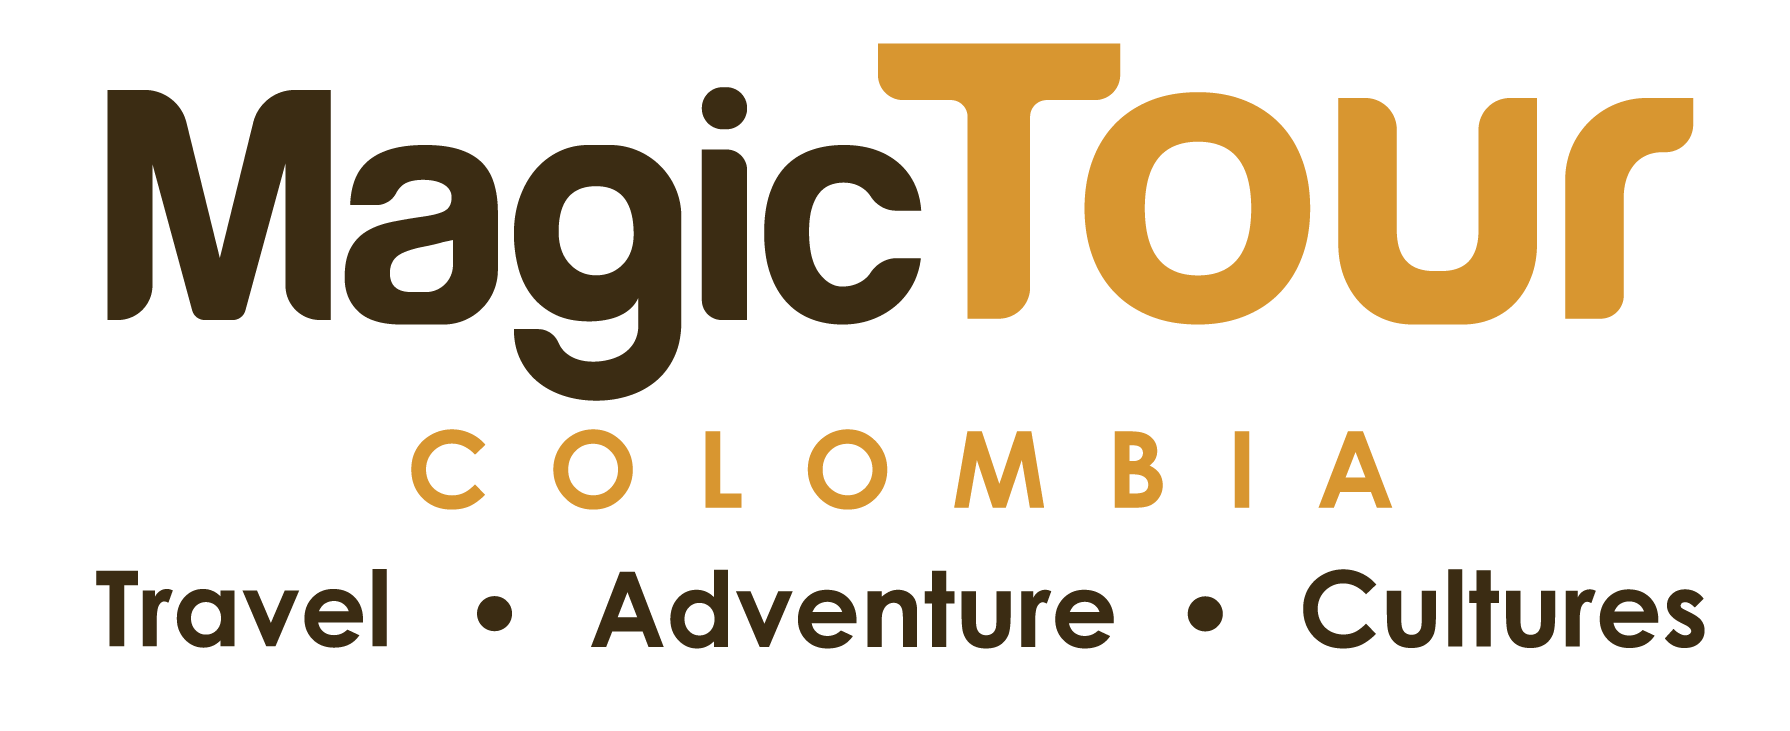 Magic Tour Colombia